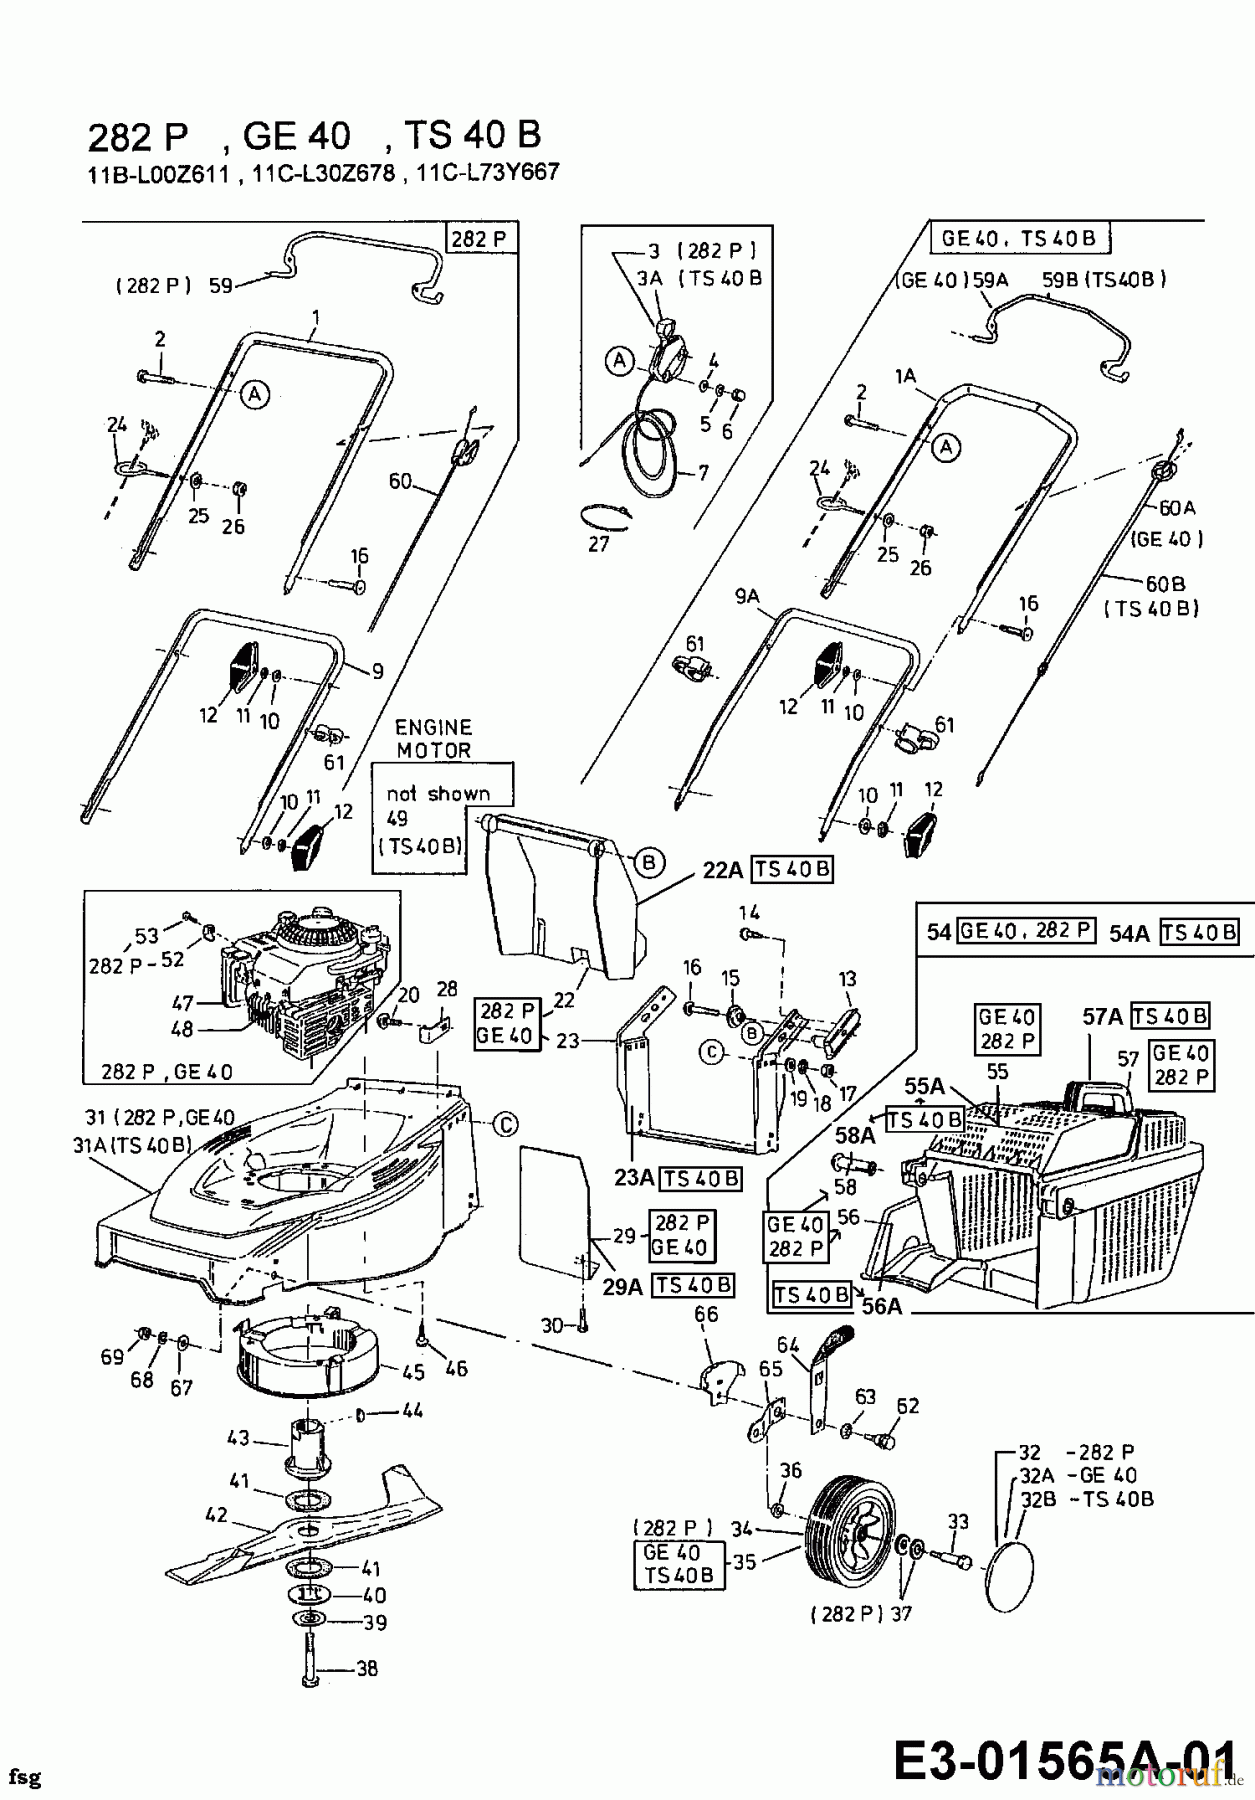  Turbo Silent Motormäher TS 40 B 11C-L73Y667  (2001) Grundgerät